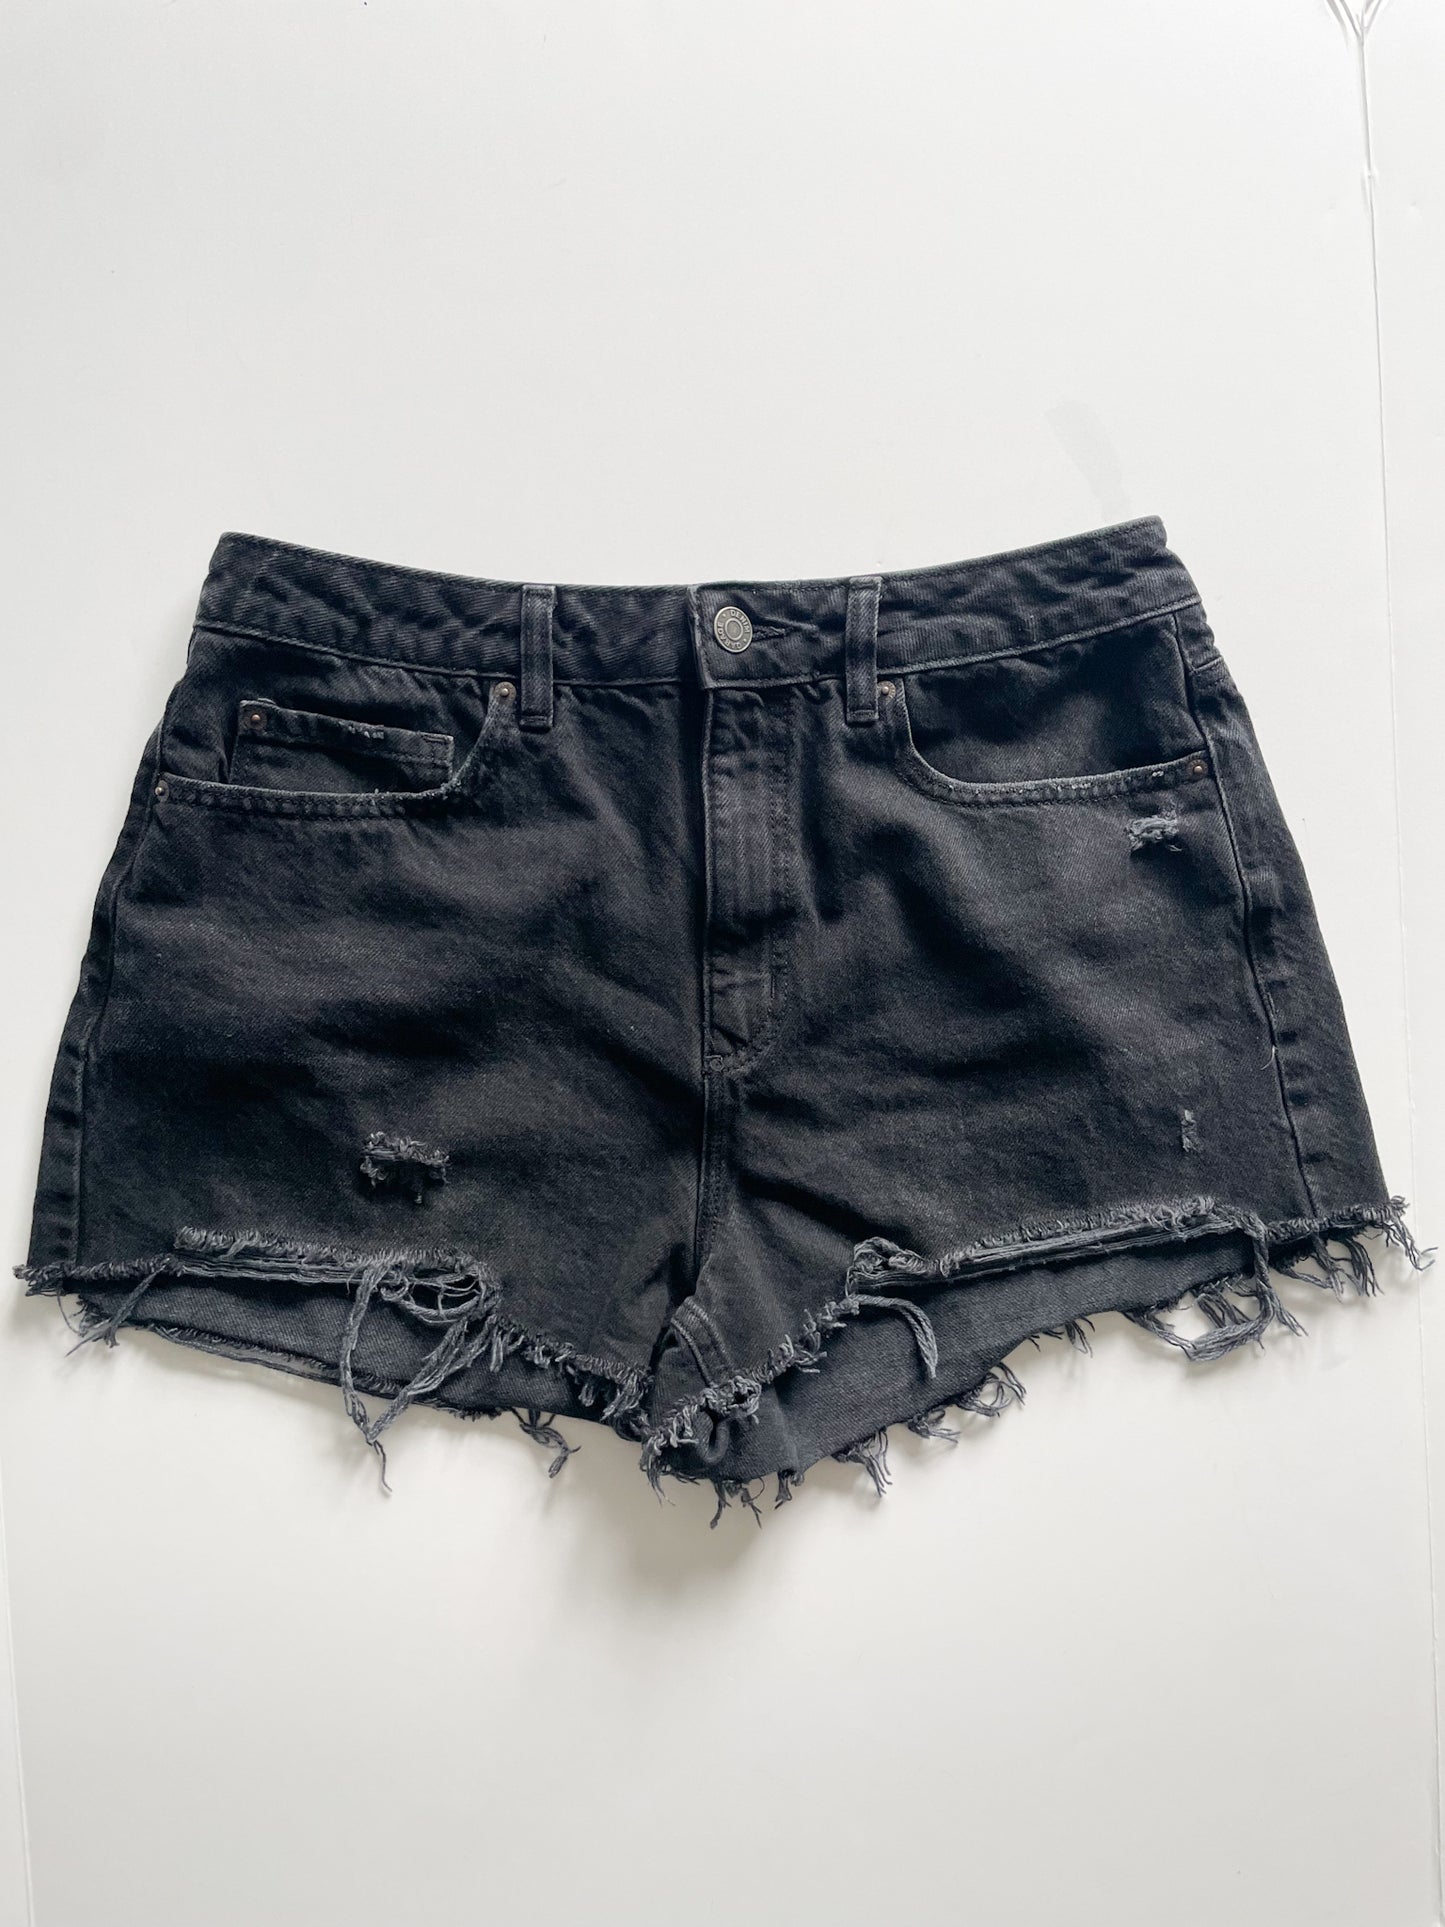 Garage Black Cutoff High Rise Cotton Denim Festival Shorts - Size 30